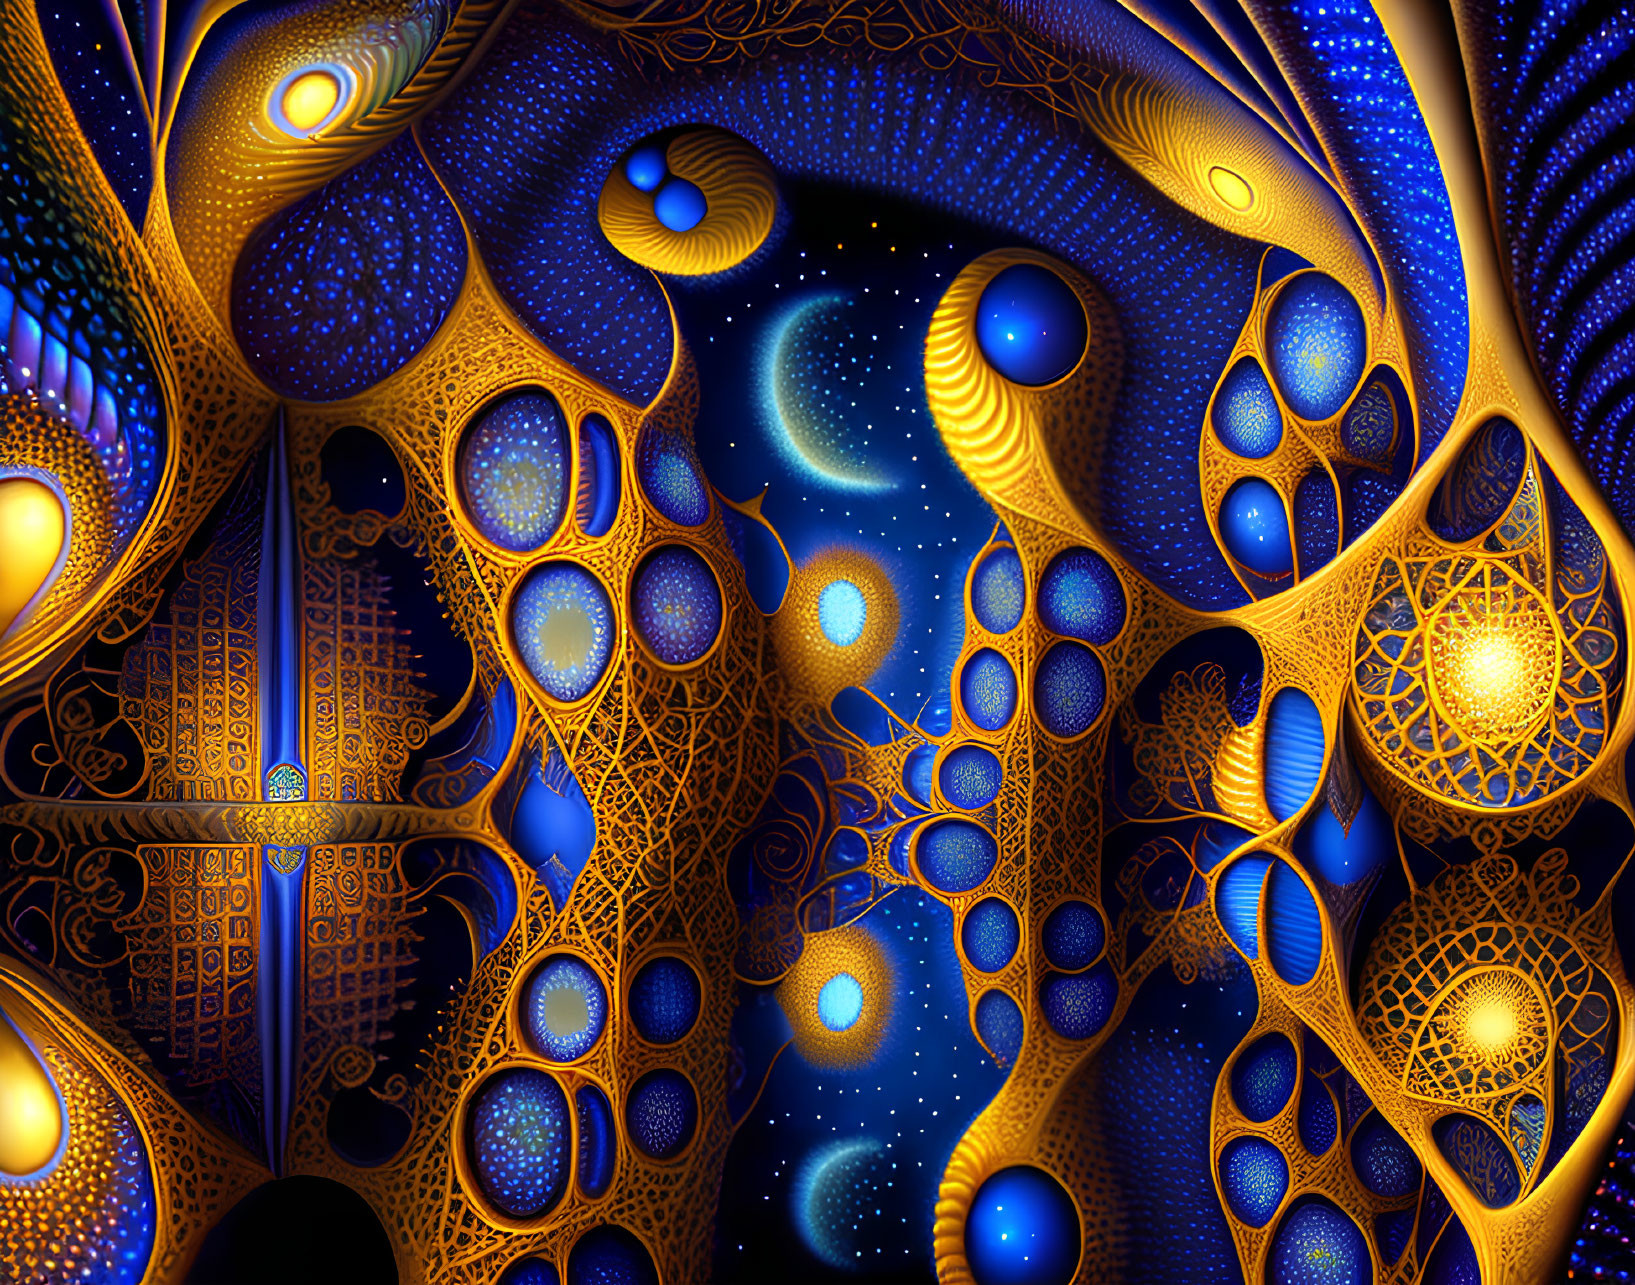 Intricate Blue and Gold Fractal Digital Artwork